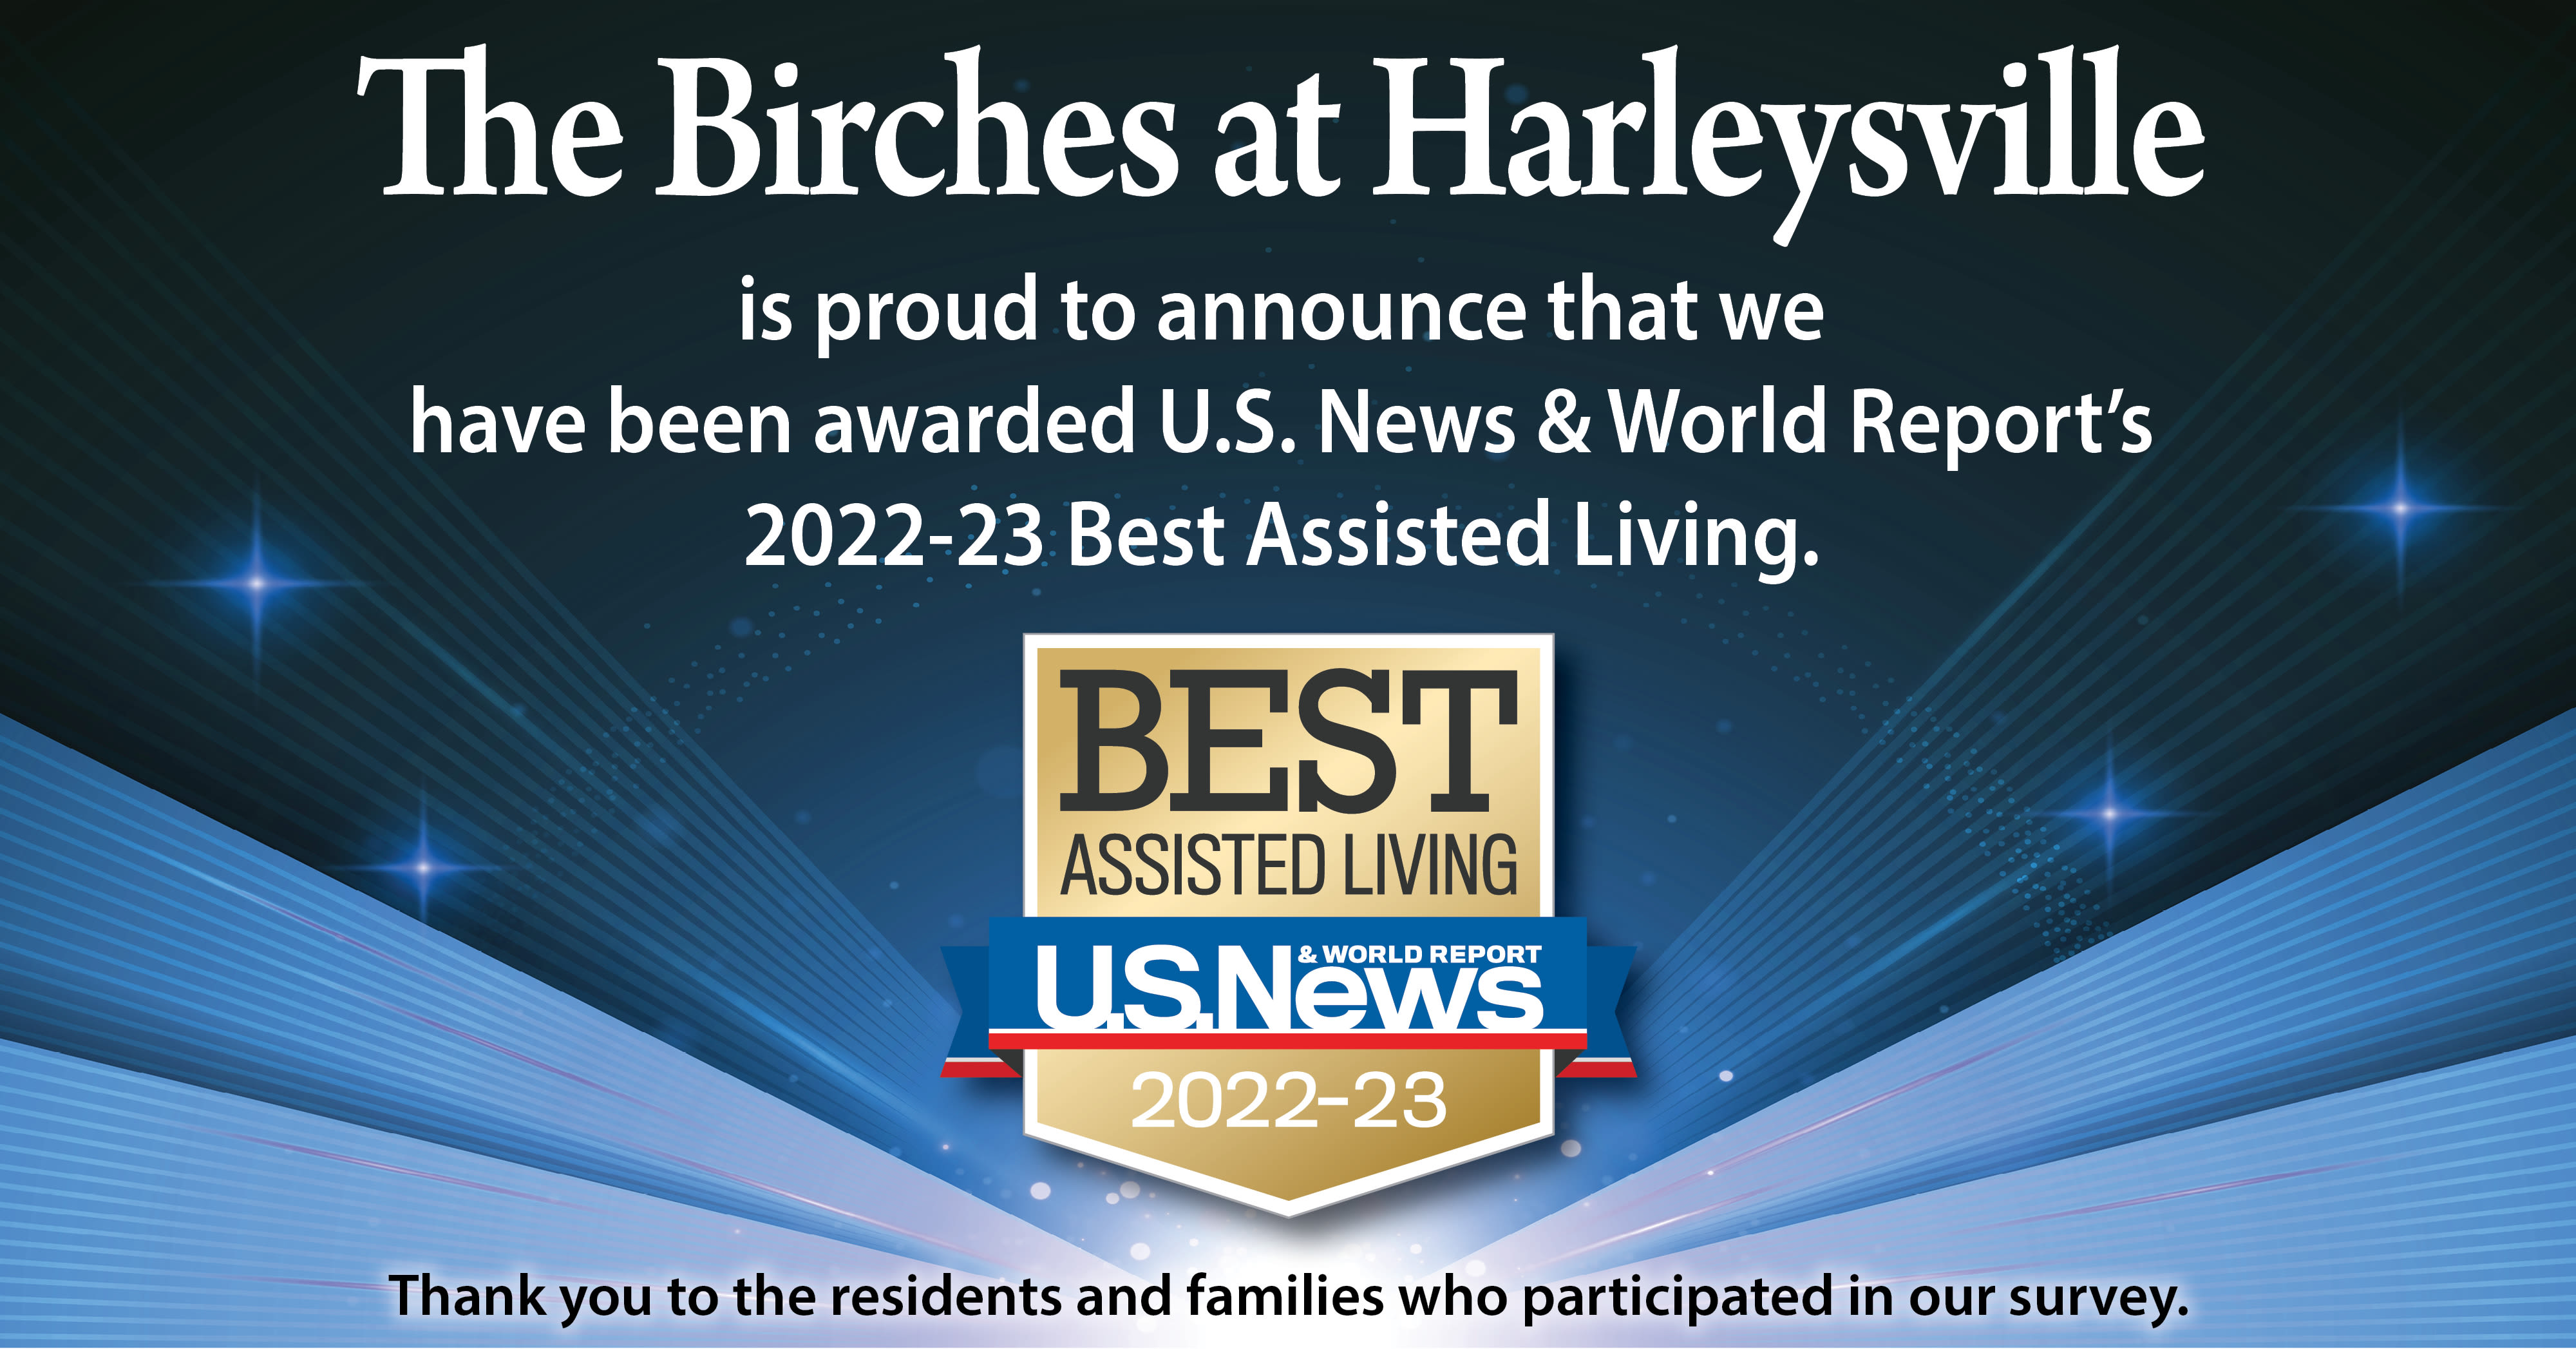 US News Best Senior Living Award 2022 for The Birches at Harleysville